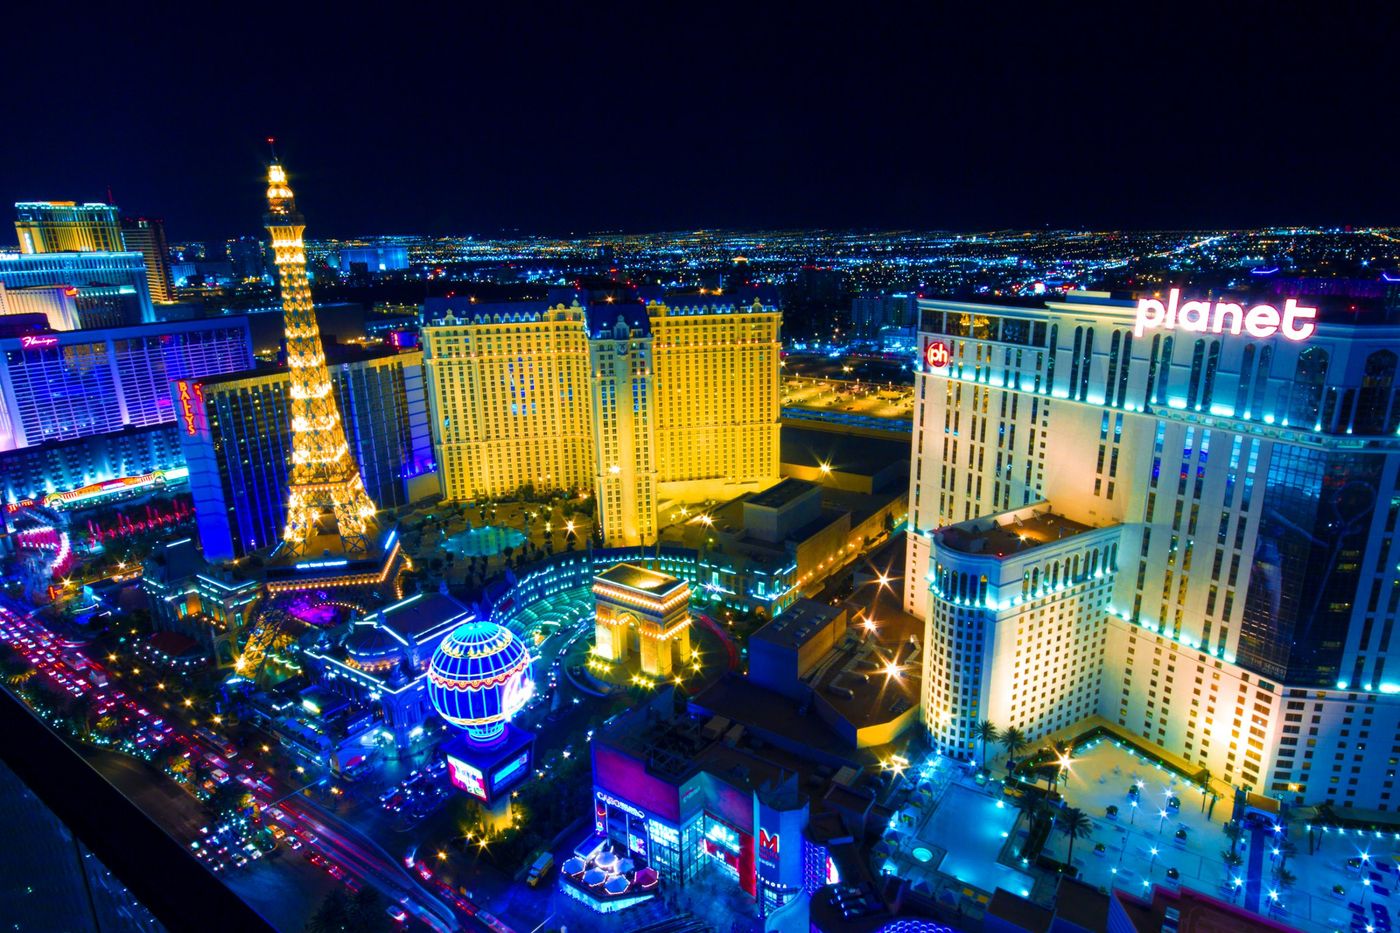 View of the Las Vegas lights. Photo: littleny/Shutterstock